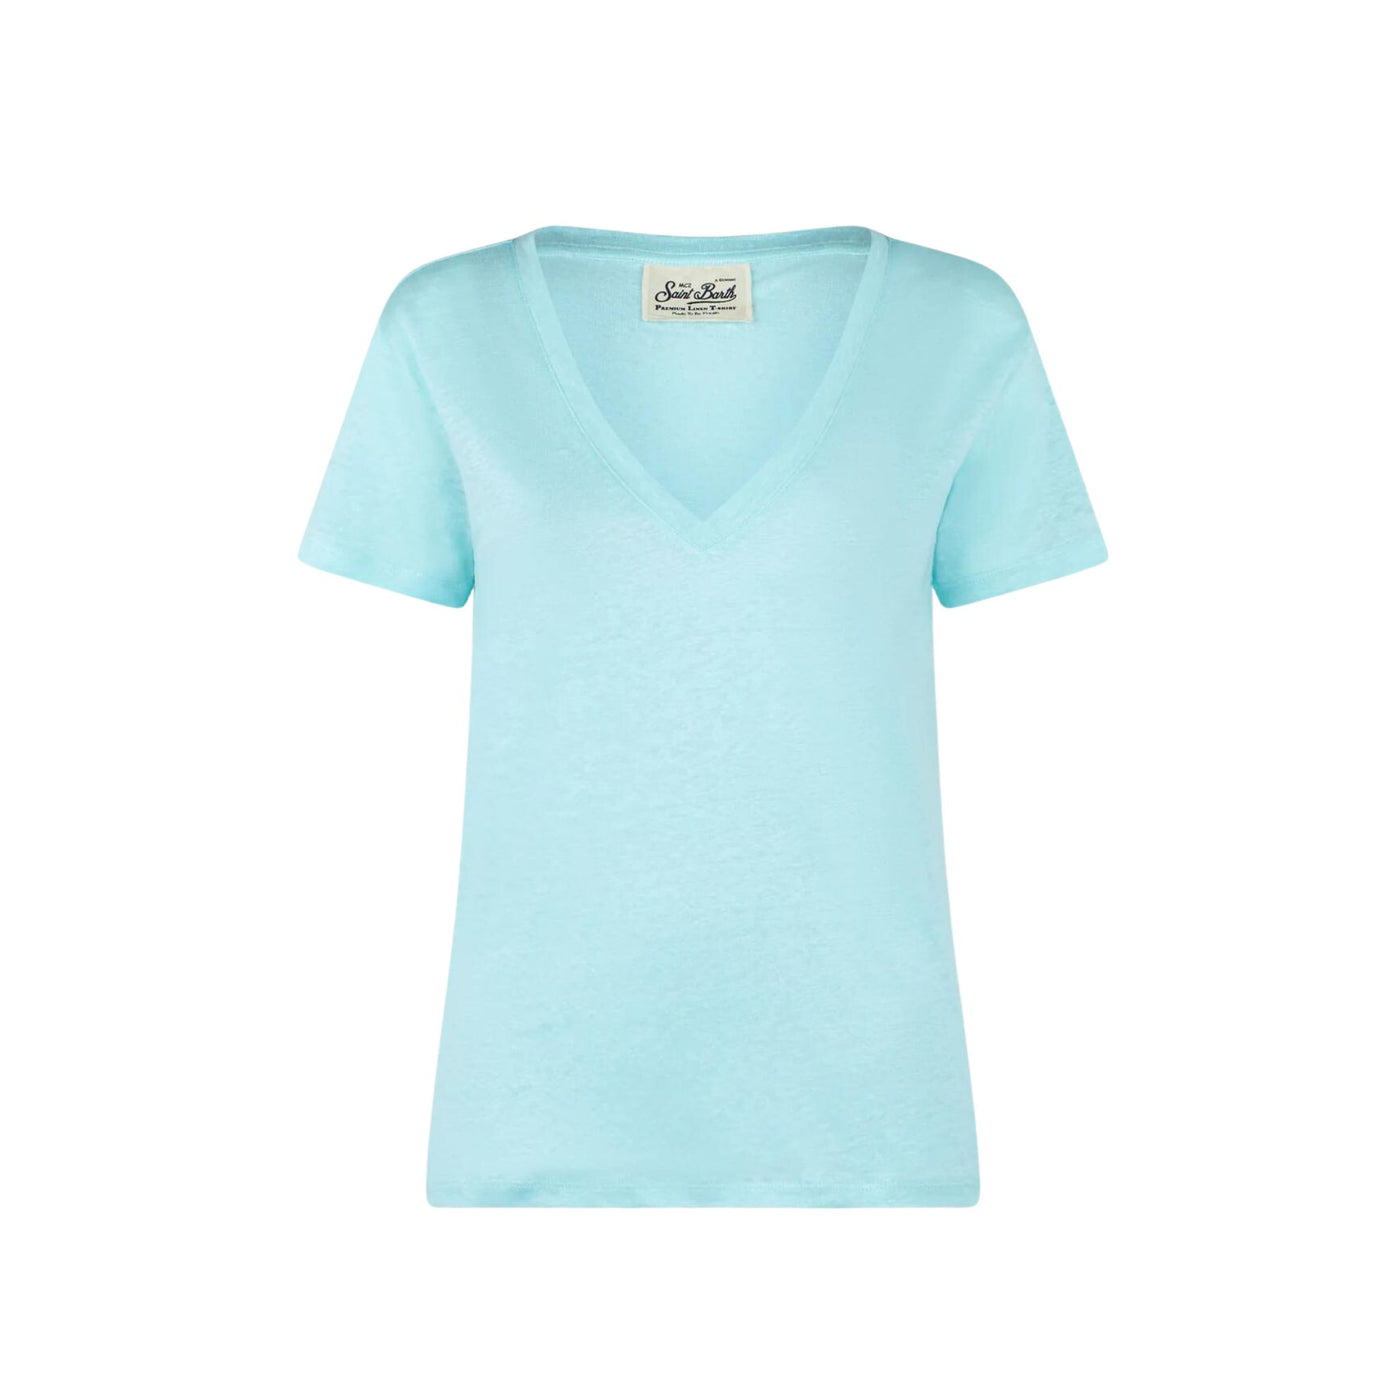 Women's T-shirt in solid color linen